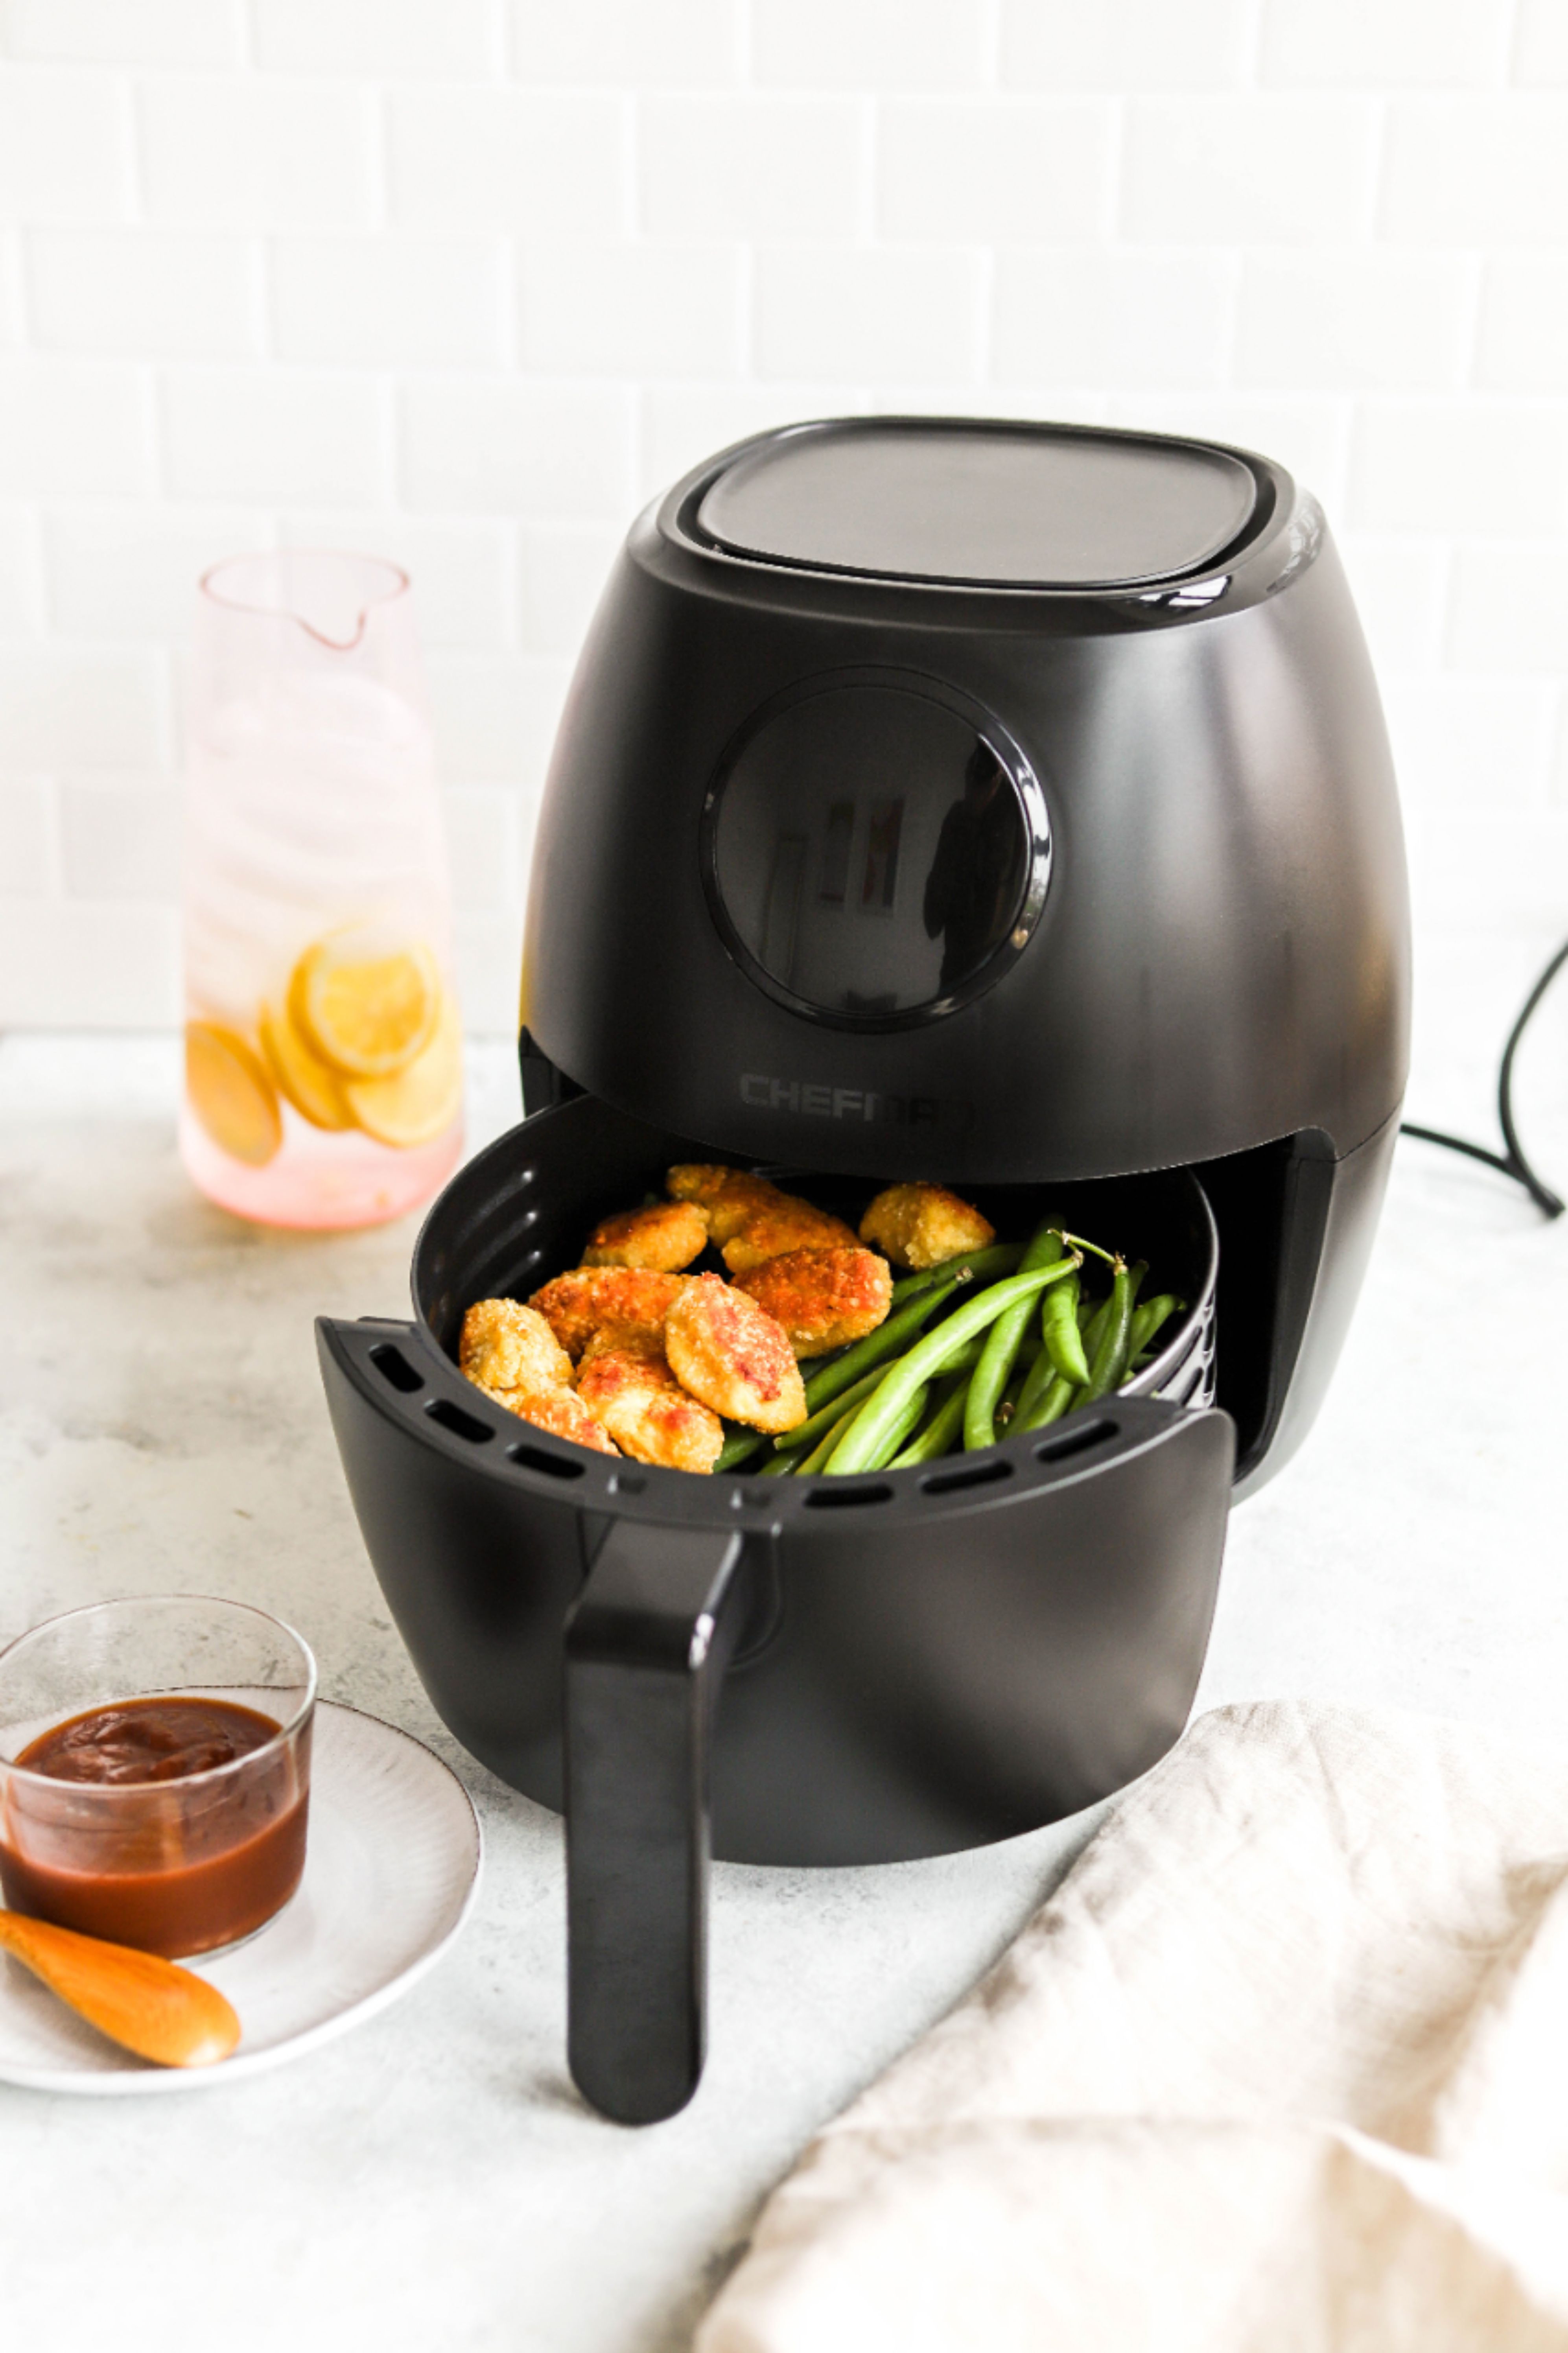 Best Buy: Chefman TurboFry Air Fryer, 8 Qt. Square Basket w/ Divider for  Dual Cooking Silver/Black RJ38-SQSS-8T-D